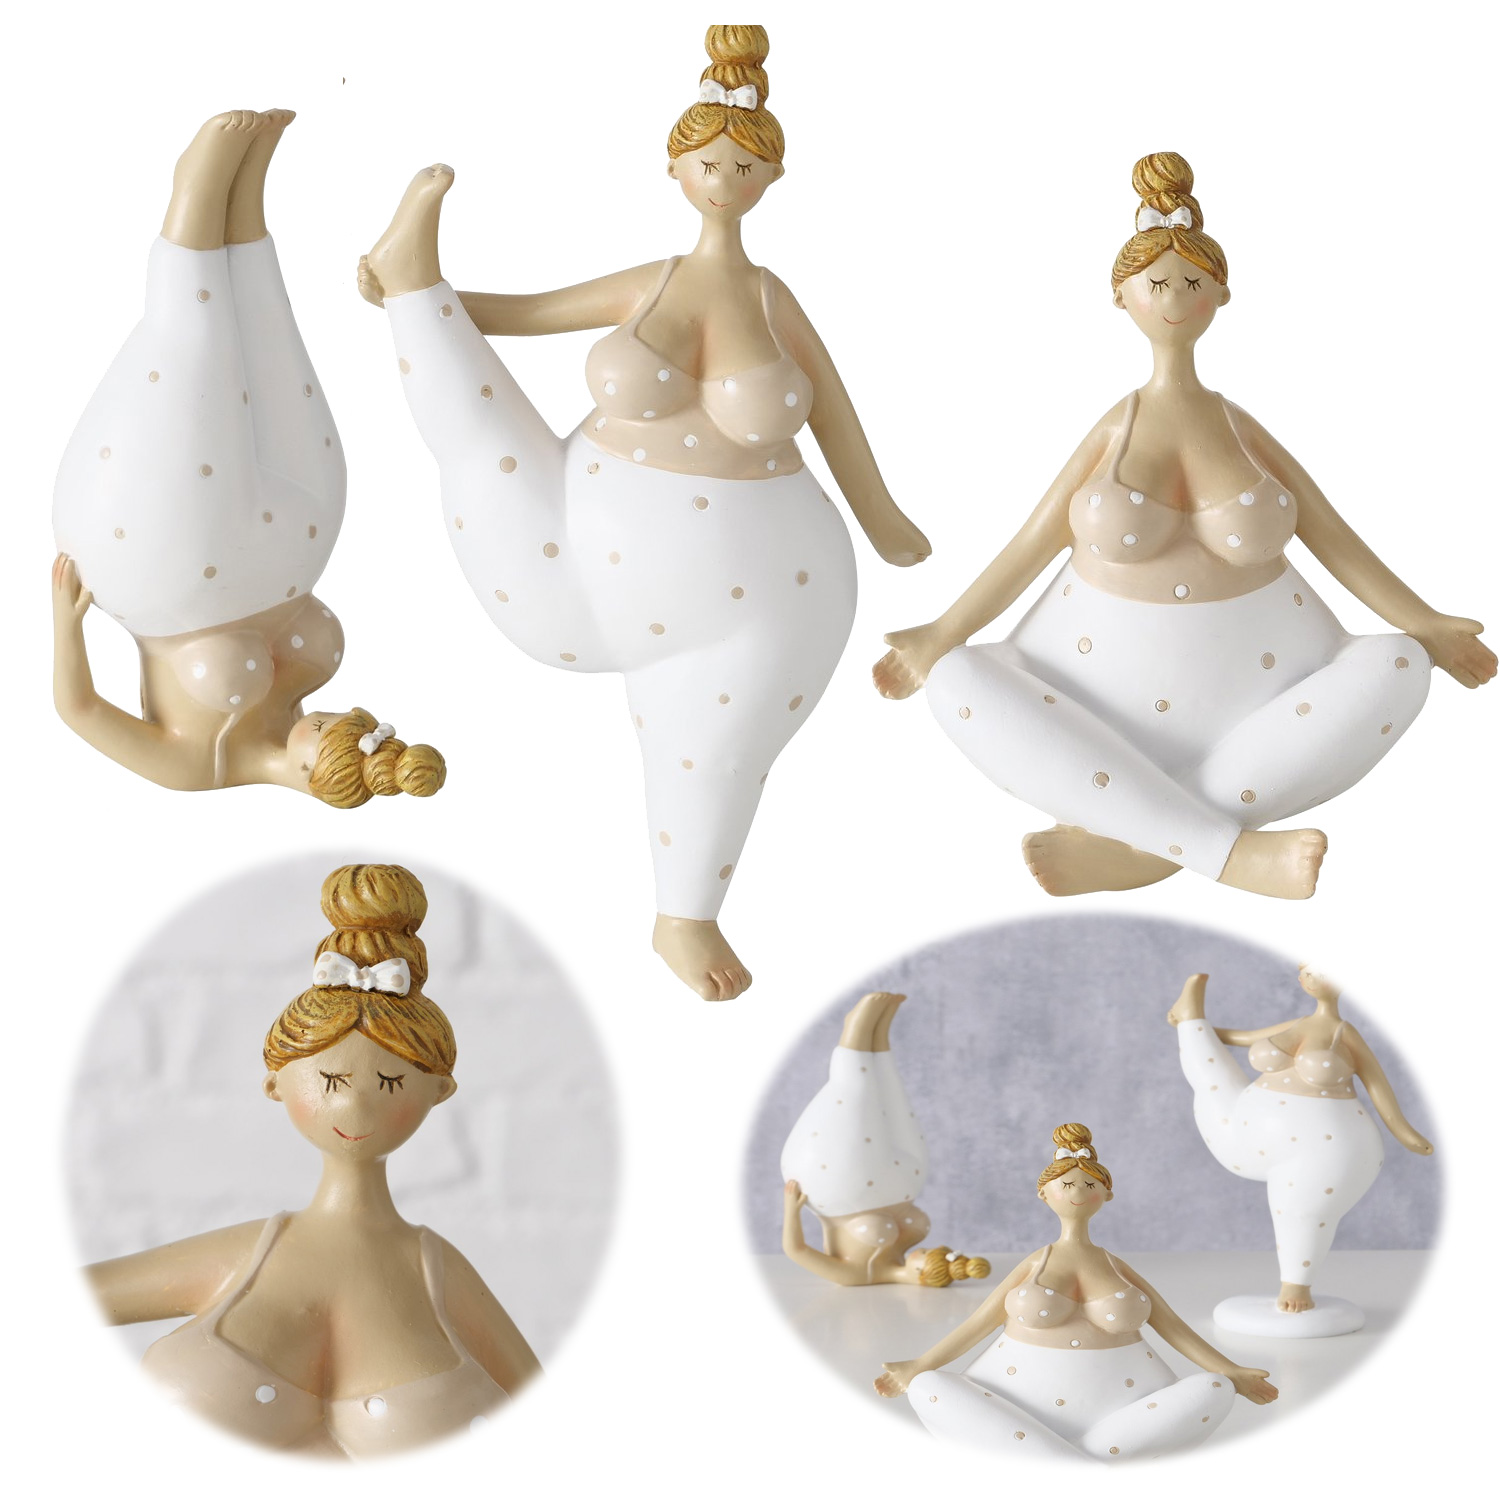 Frauen LS-LebenStil Yoga 3 Deko-Figur Set